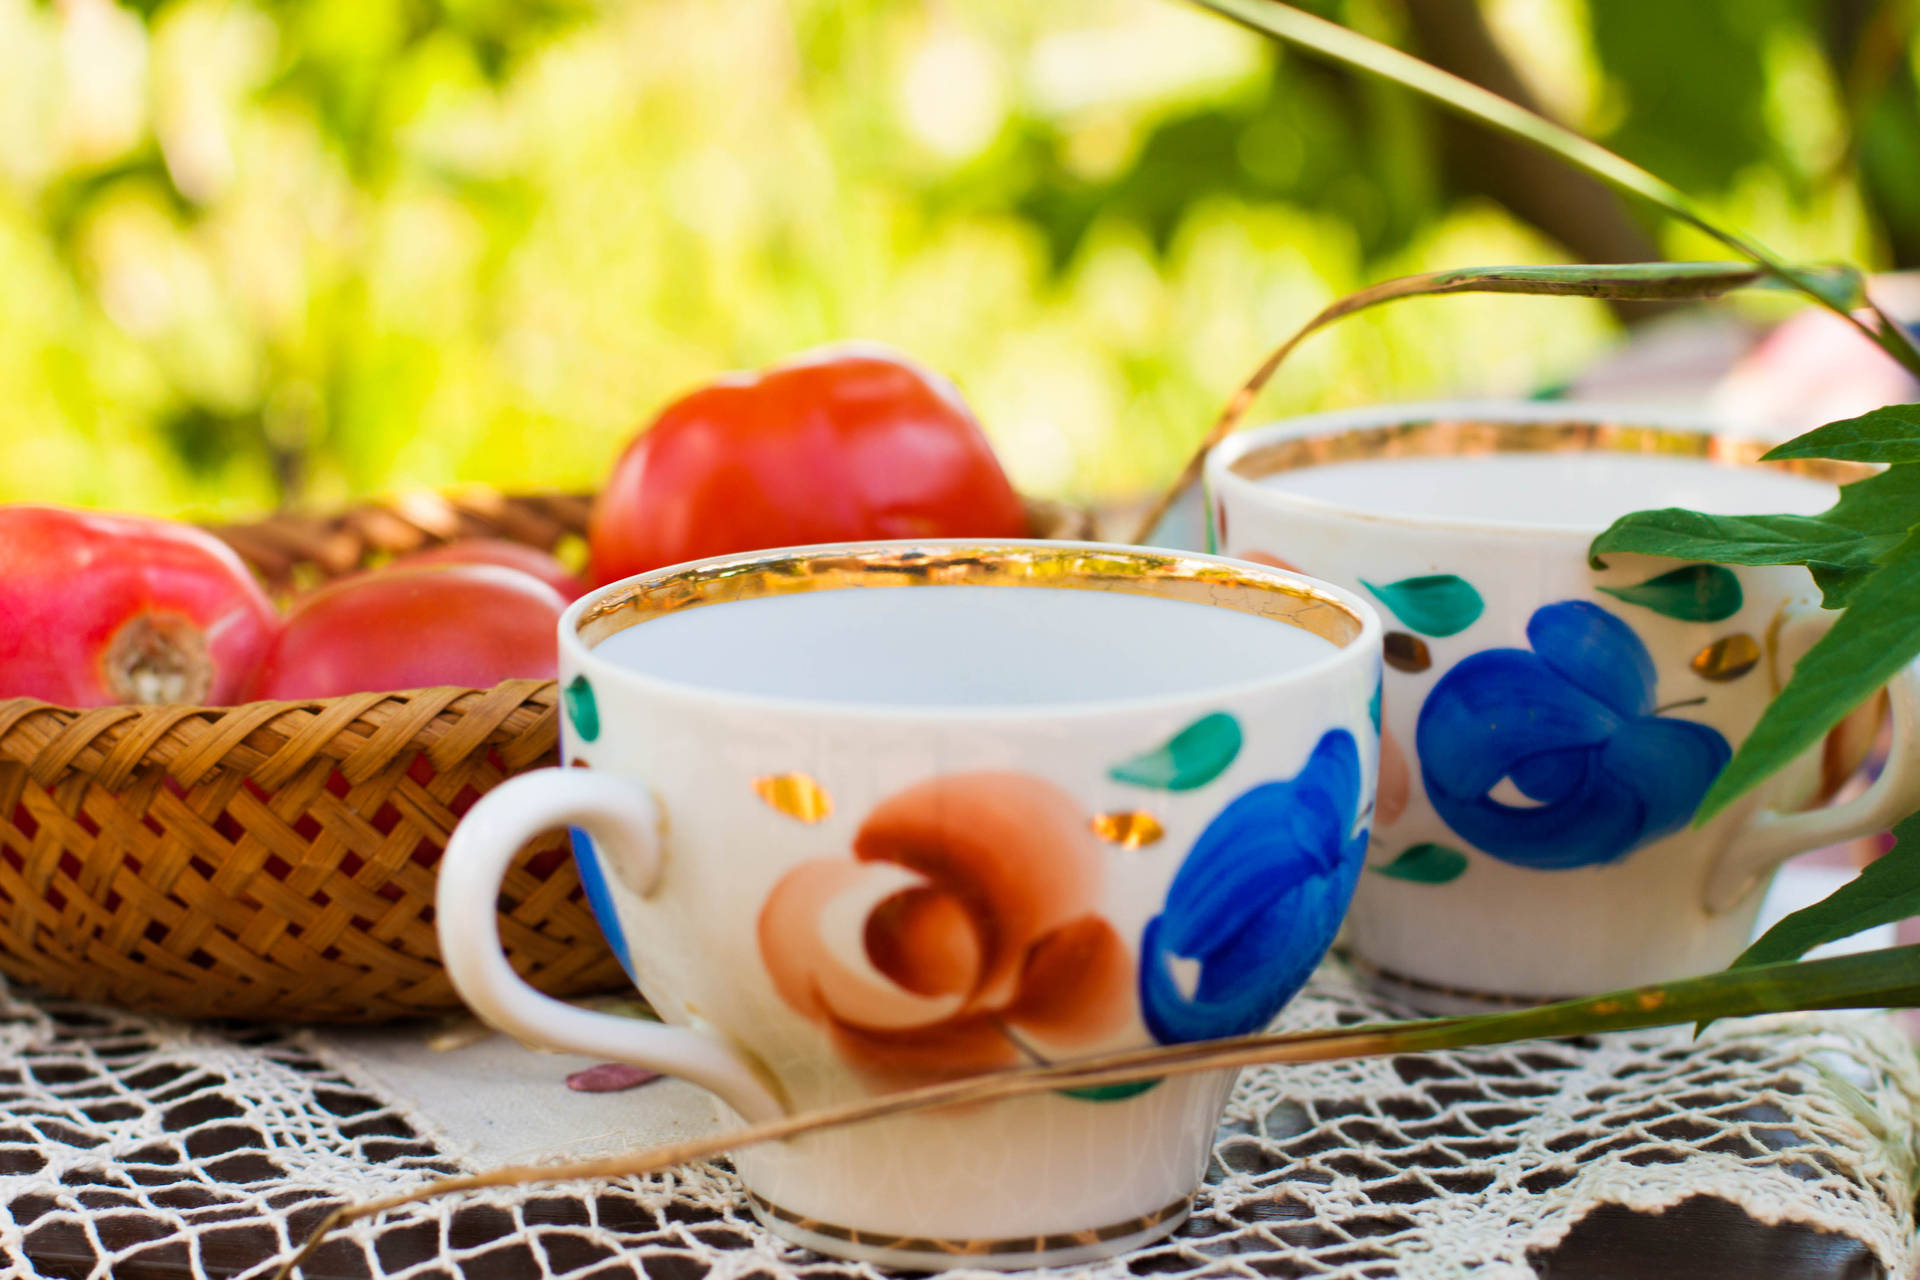 Floral Ceramic Teacups Image